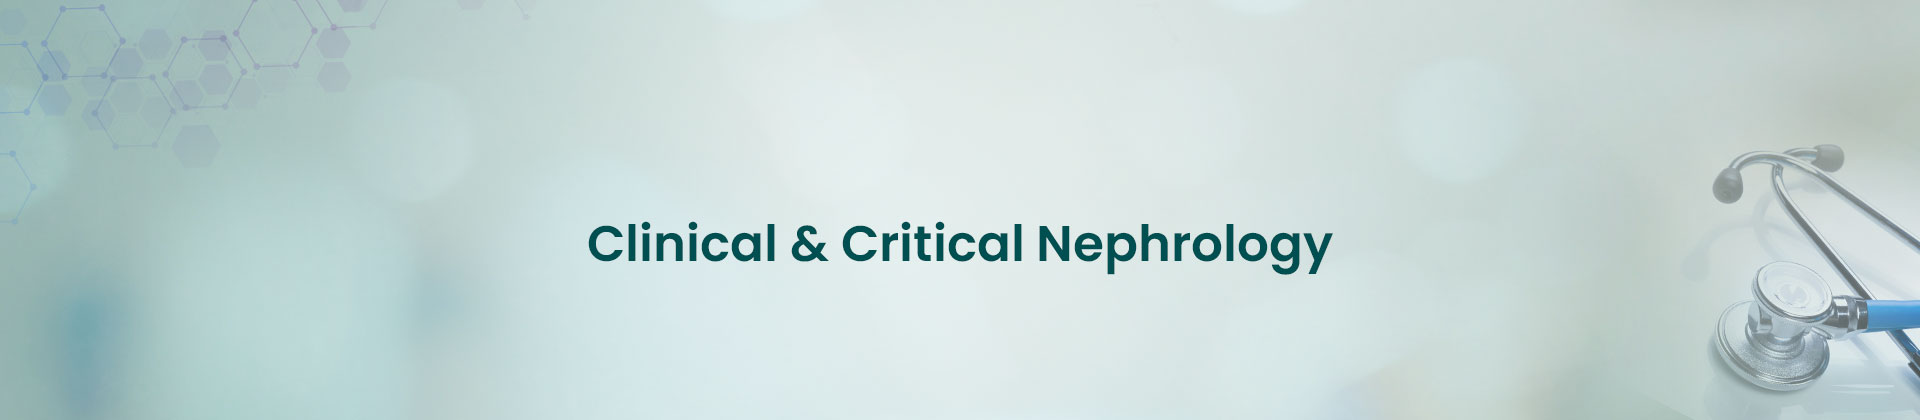 Clinical & Critical Nephrology